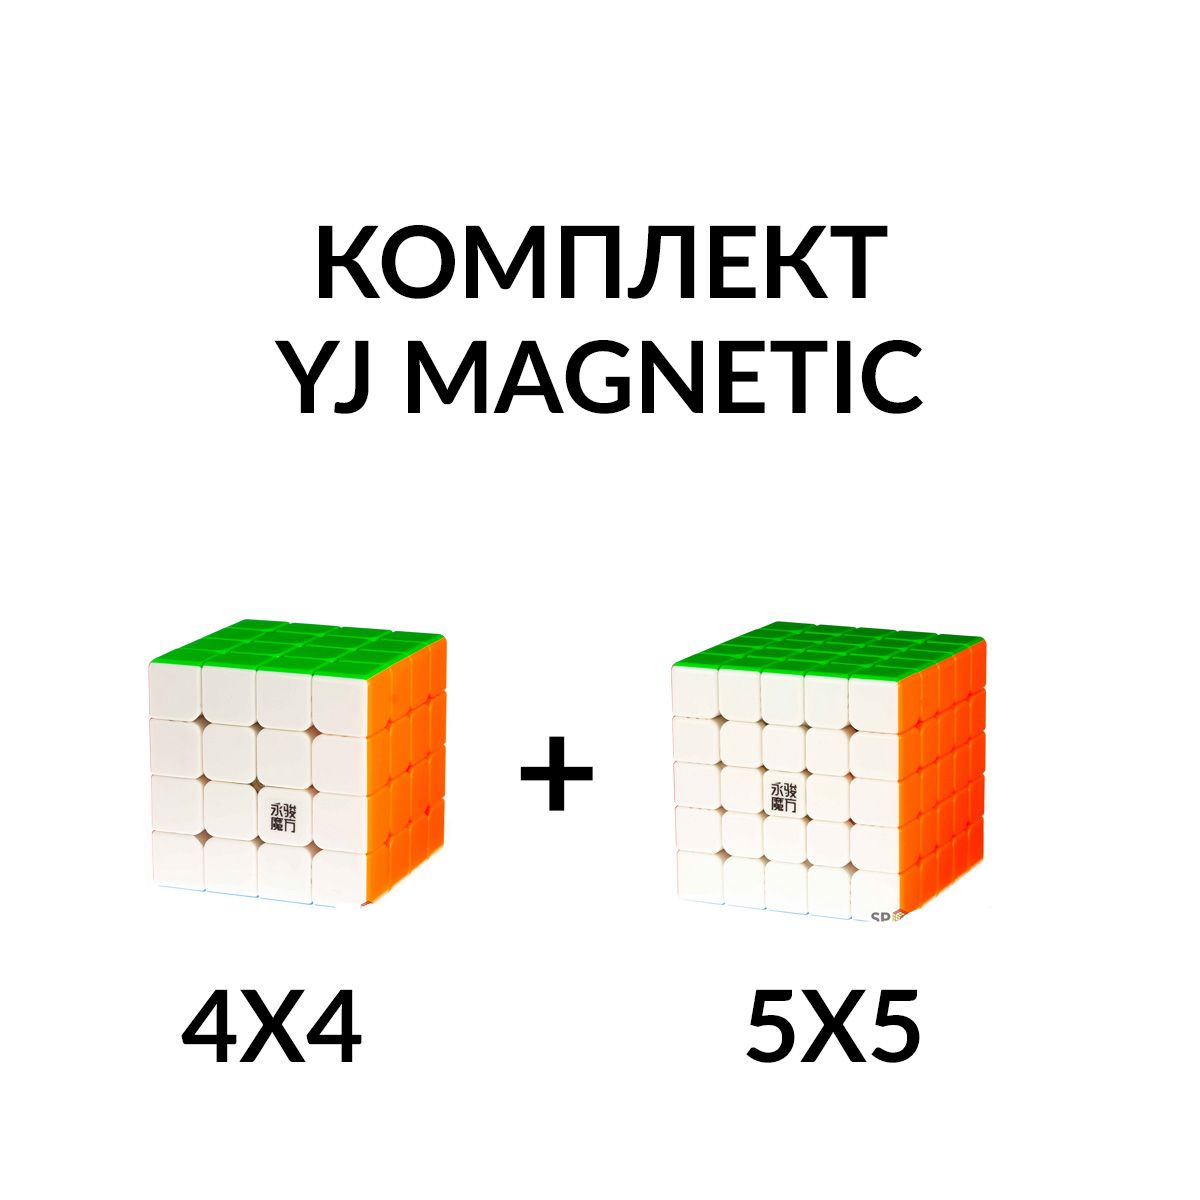 Комплект кубик Рубика YJ Magnetic магнитный скоростной 4х4 и 5х5